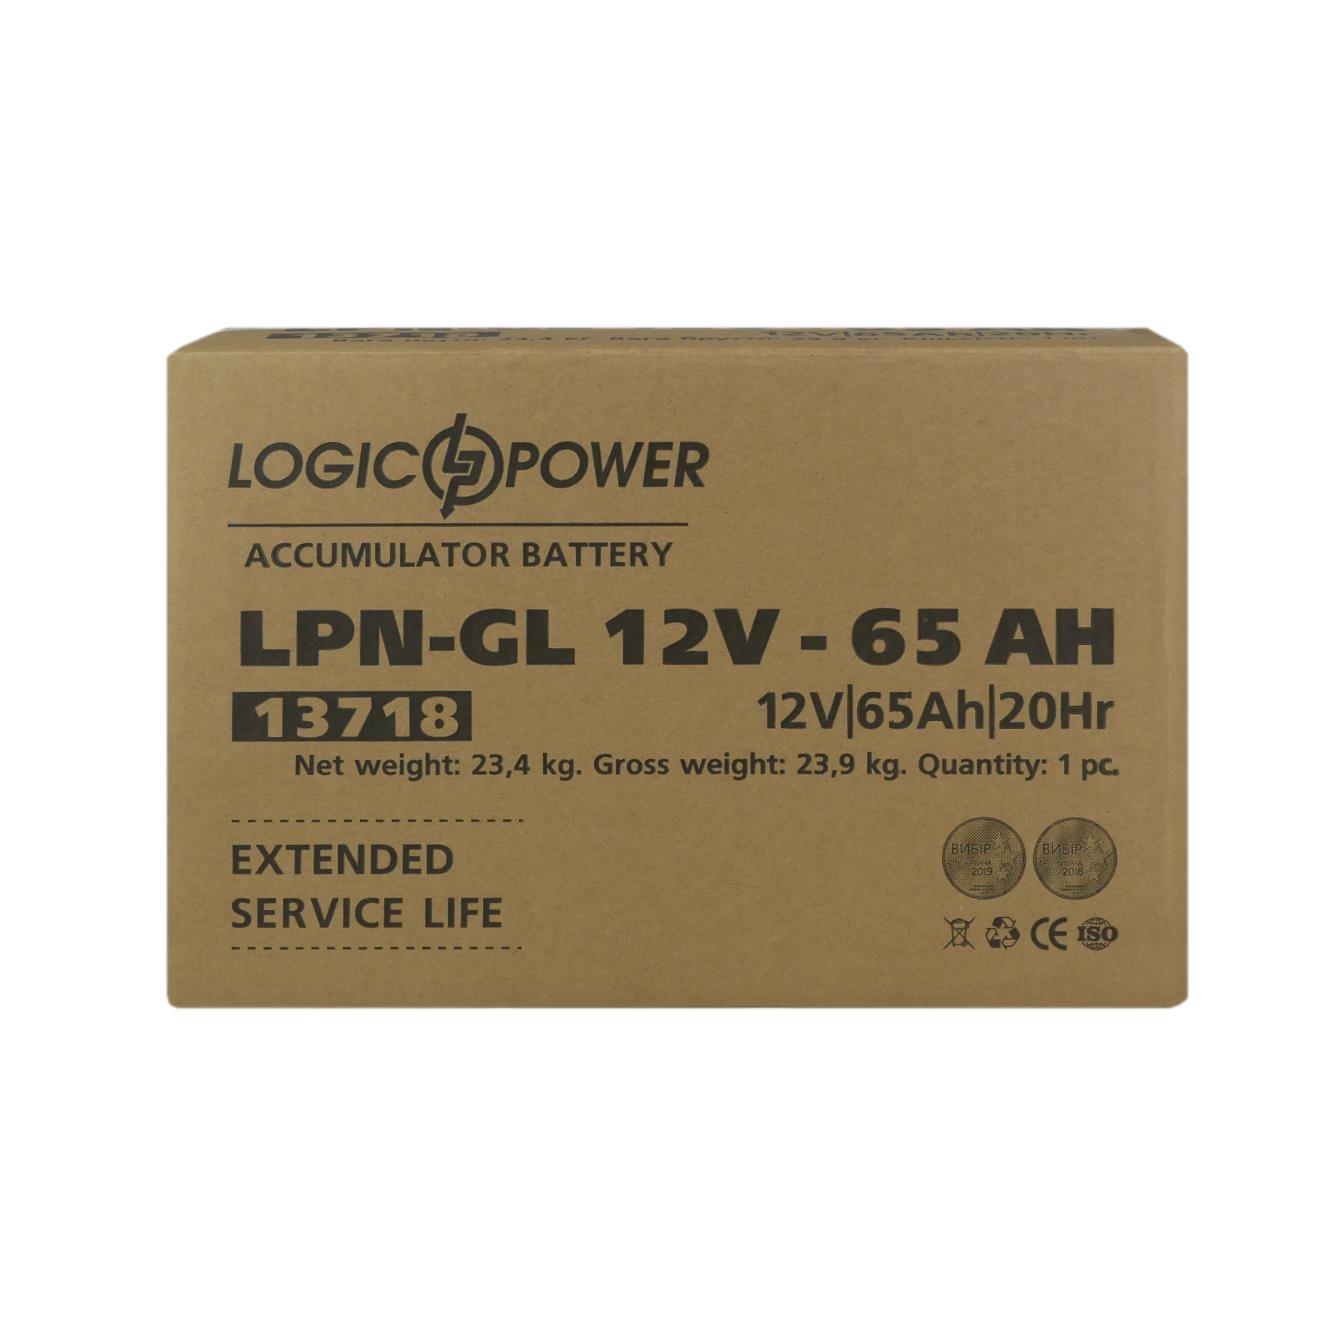 Аккумулятор гелевый LogicPower LPN-GL 12V - 65 Ah (13718) характеристики - фотография 7